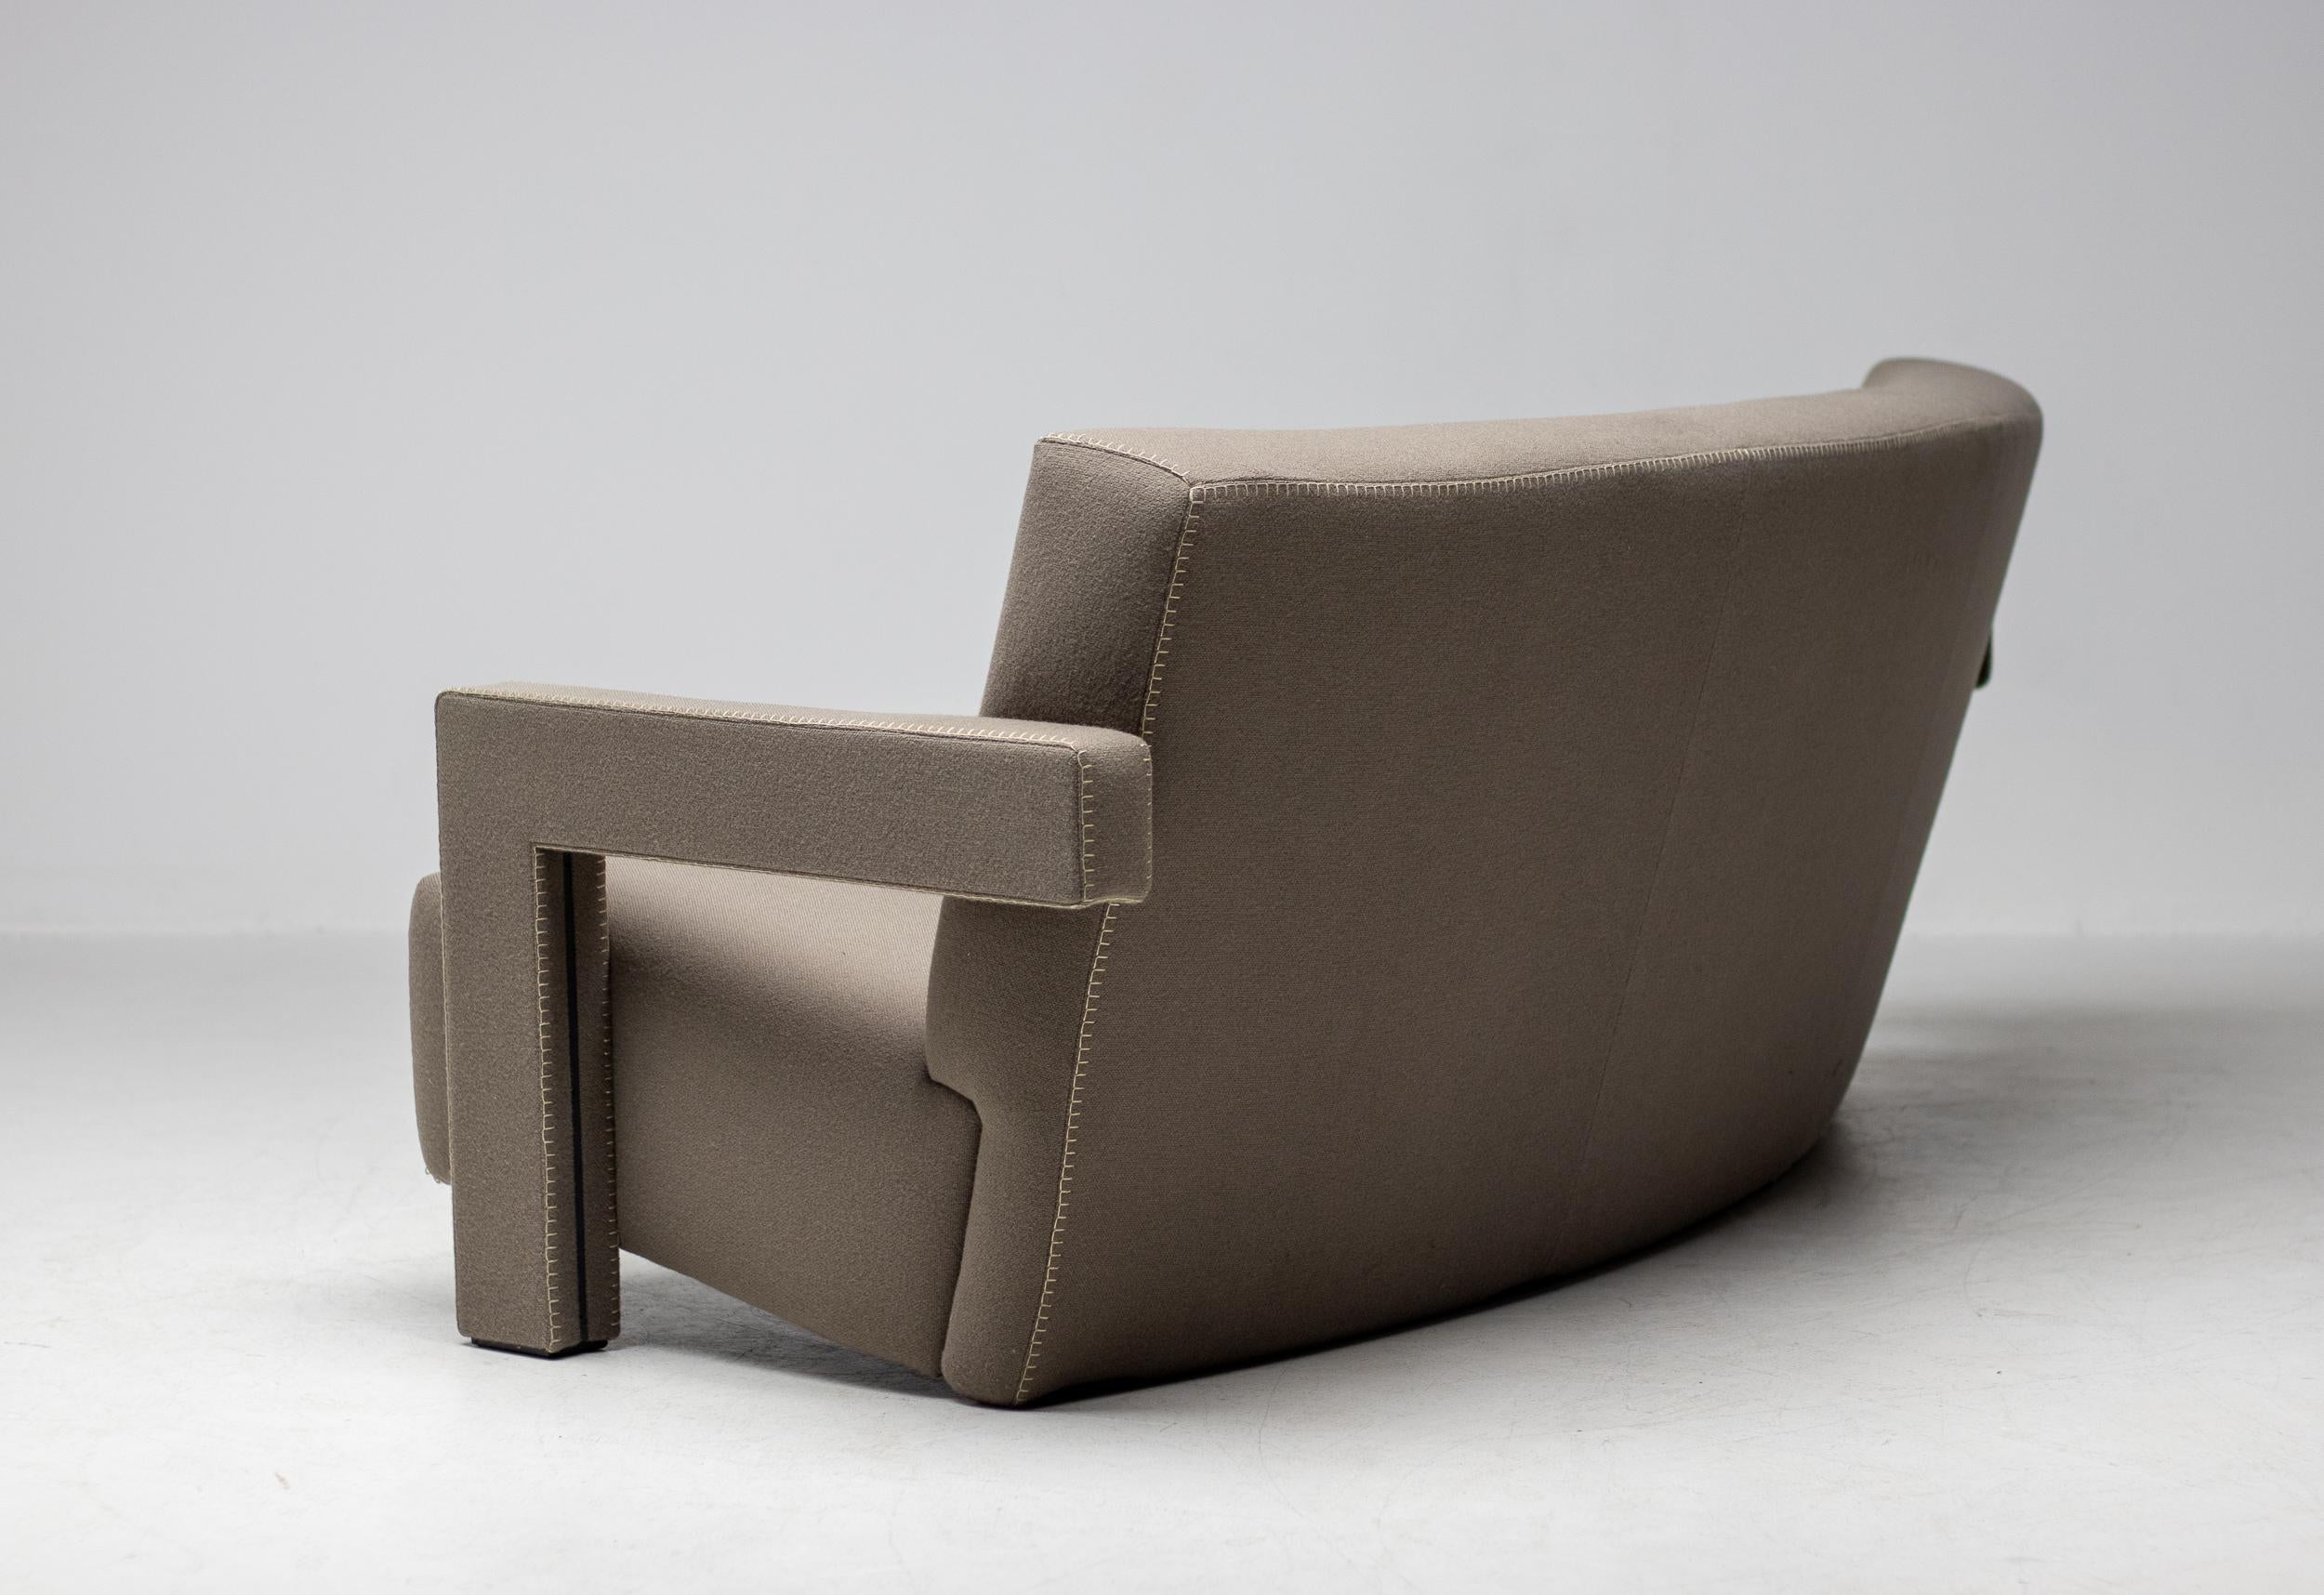 Fabric Gerrit Thomas Rietveld Utrecht Sofa by Cassina